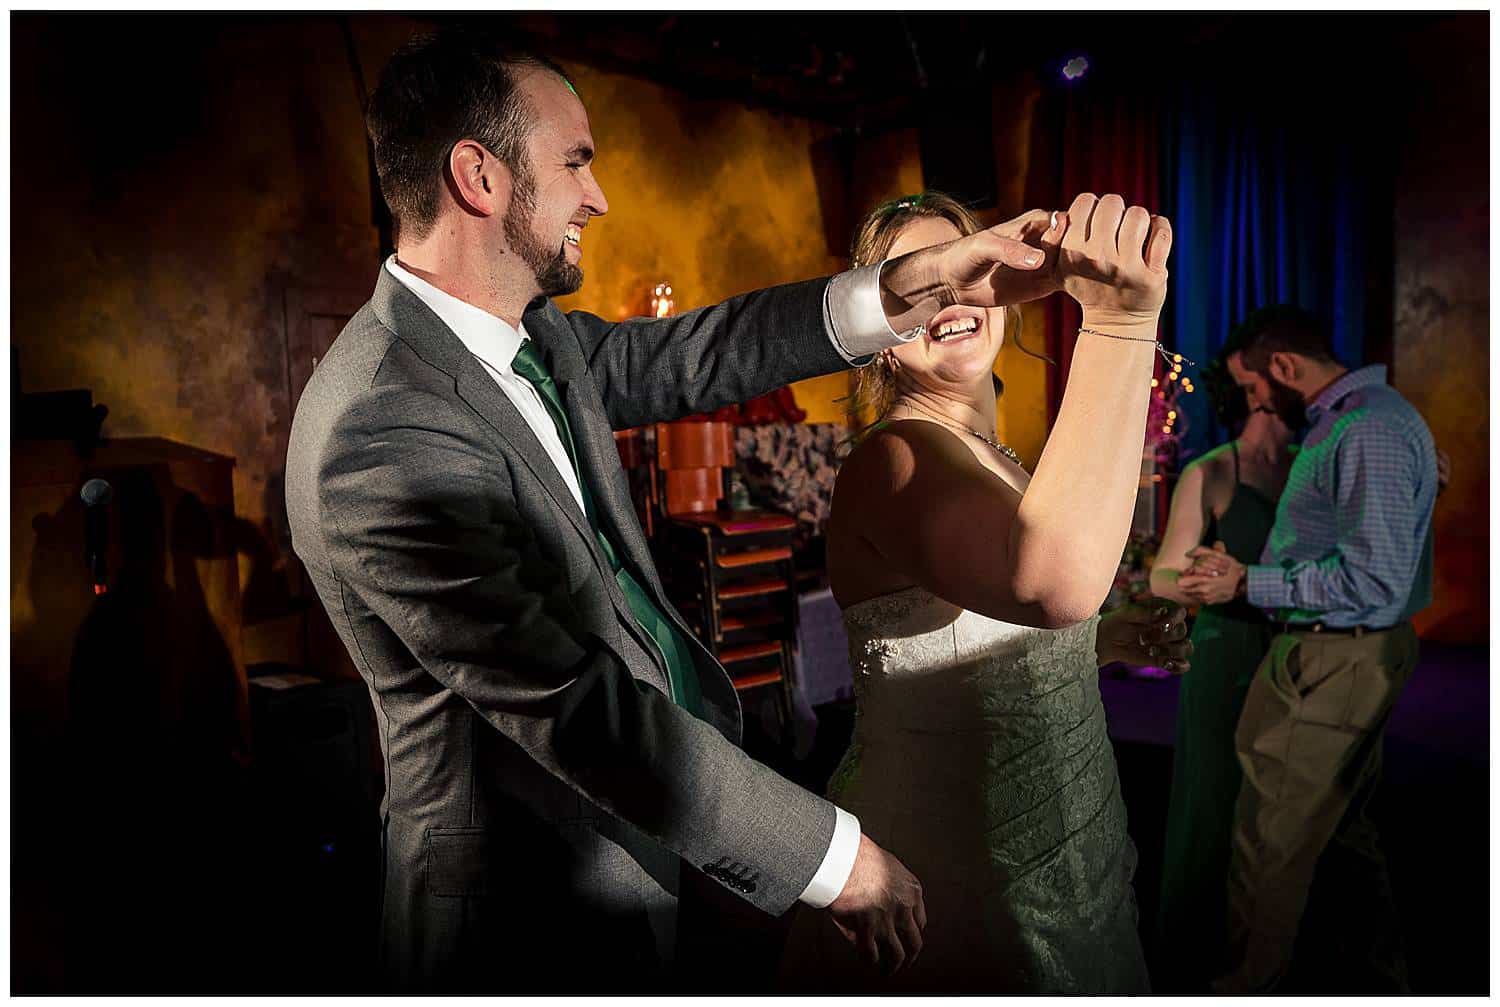 Candid dancing photos at wedding reception in Denver